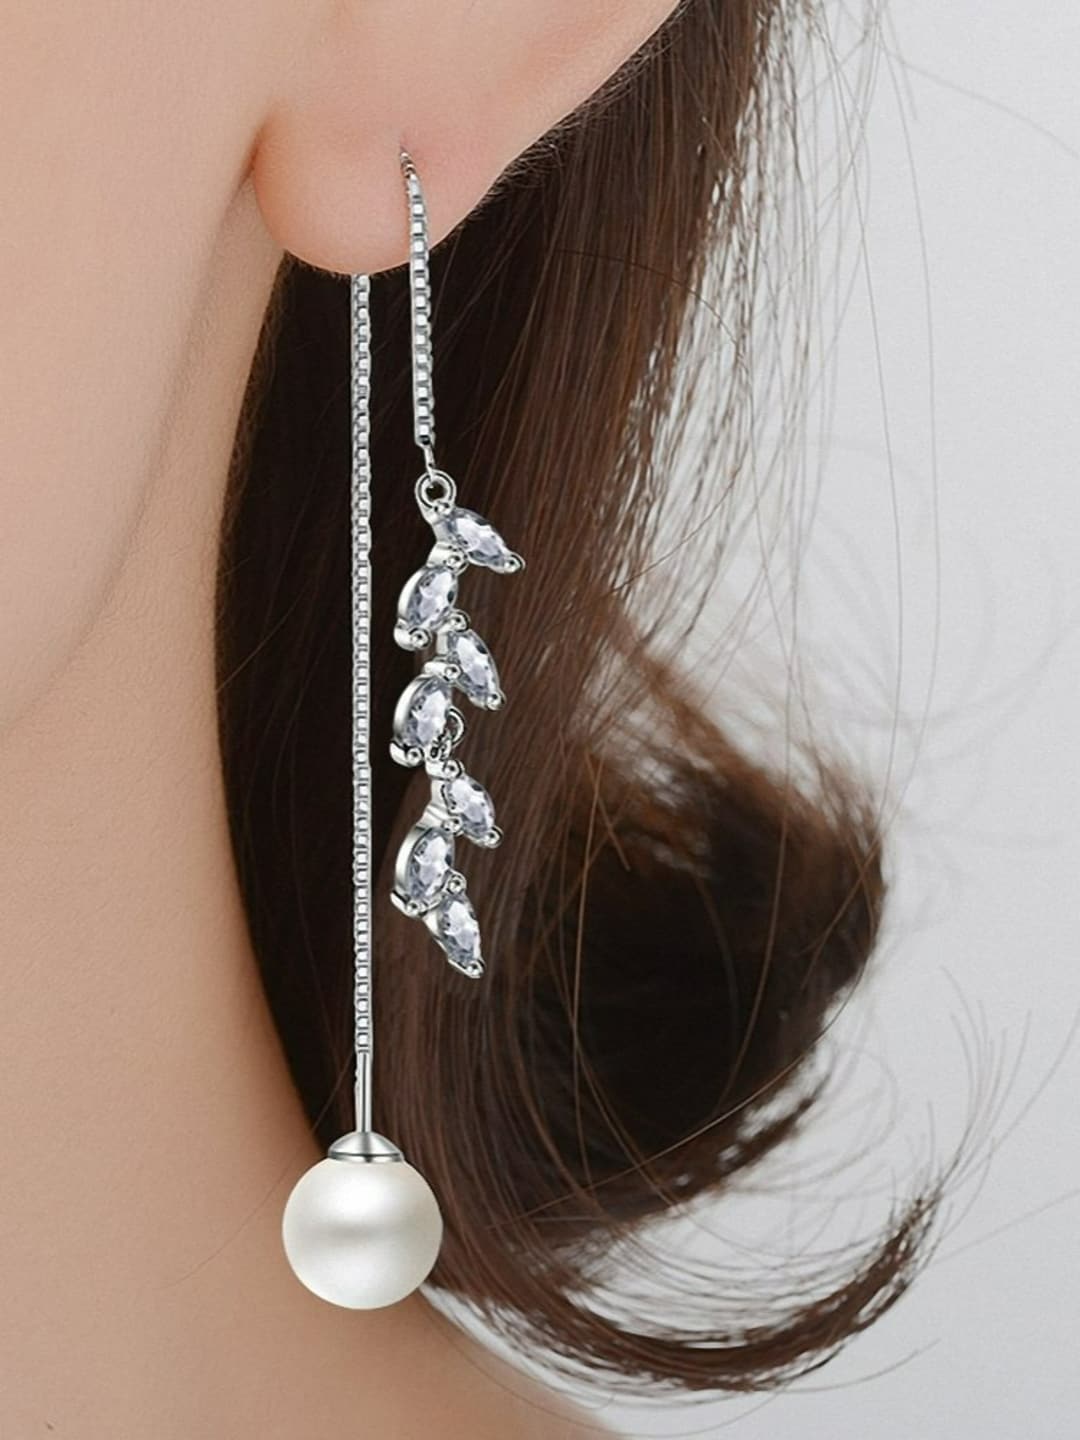 EL REGALO Silver-Toned Oval Drop Earrings - for Women and Girls
Style ID: 16991458